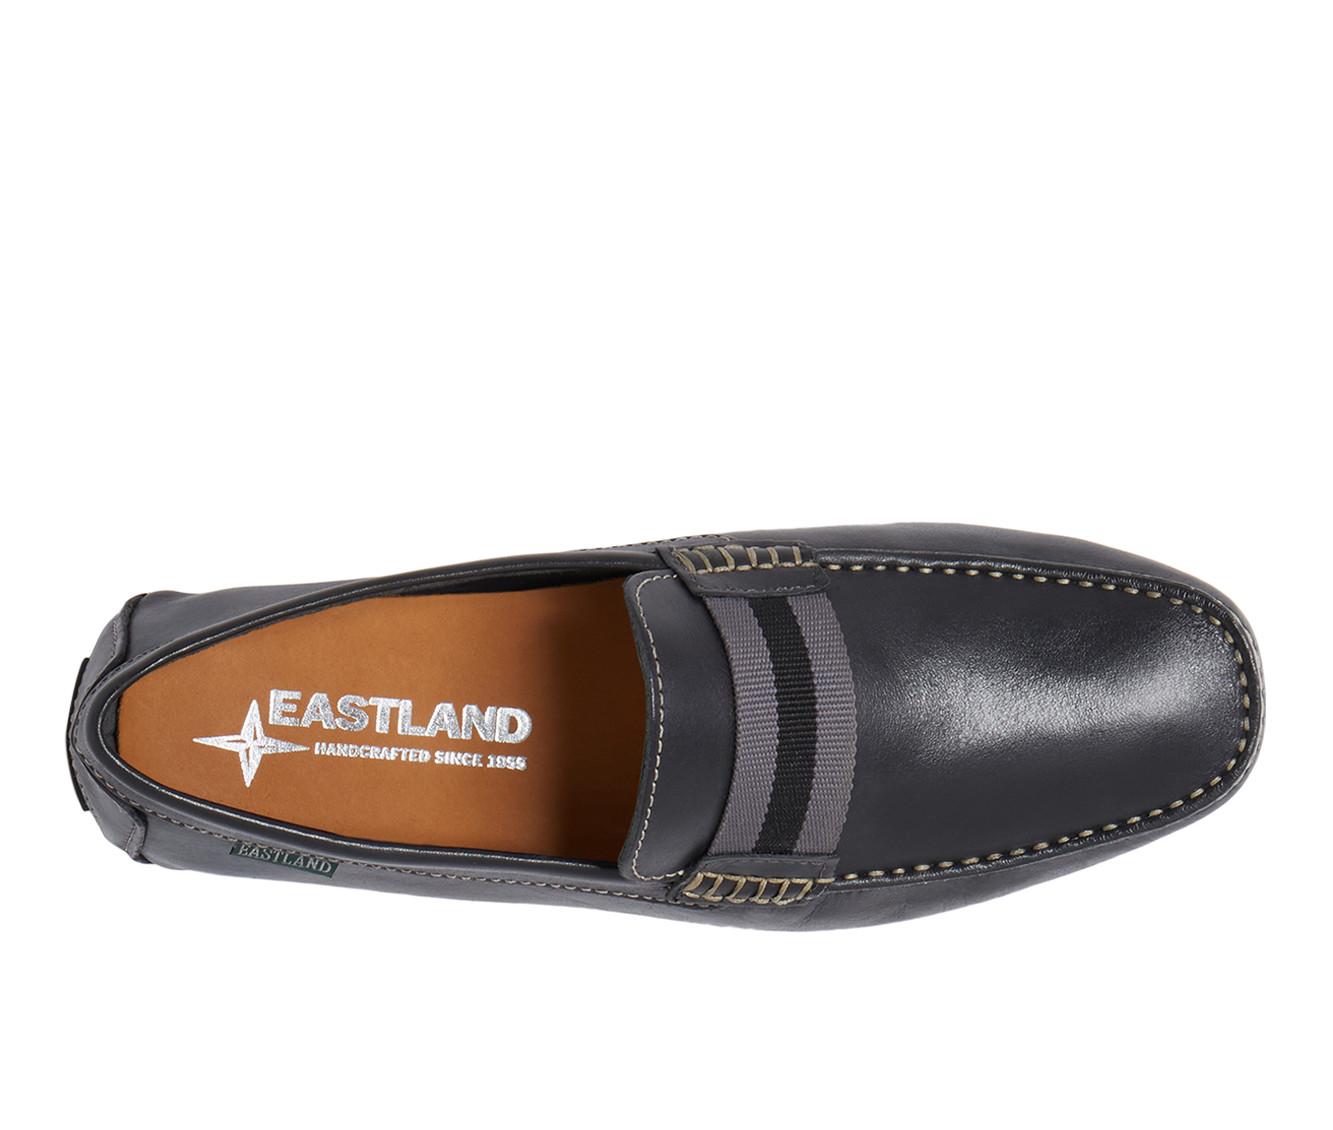 Men's Eastland Whitman Driving Moc Loafers